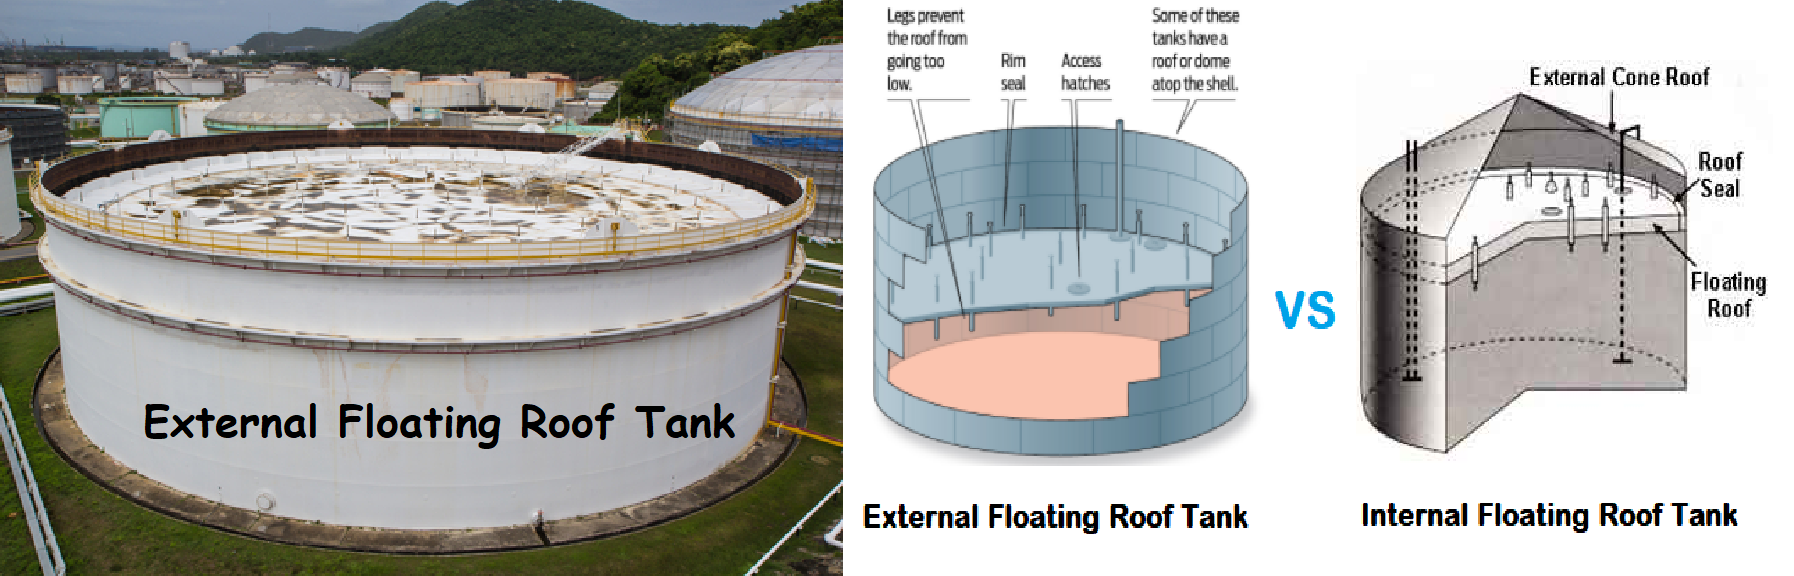 External Floating Roof Storage Tanks